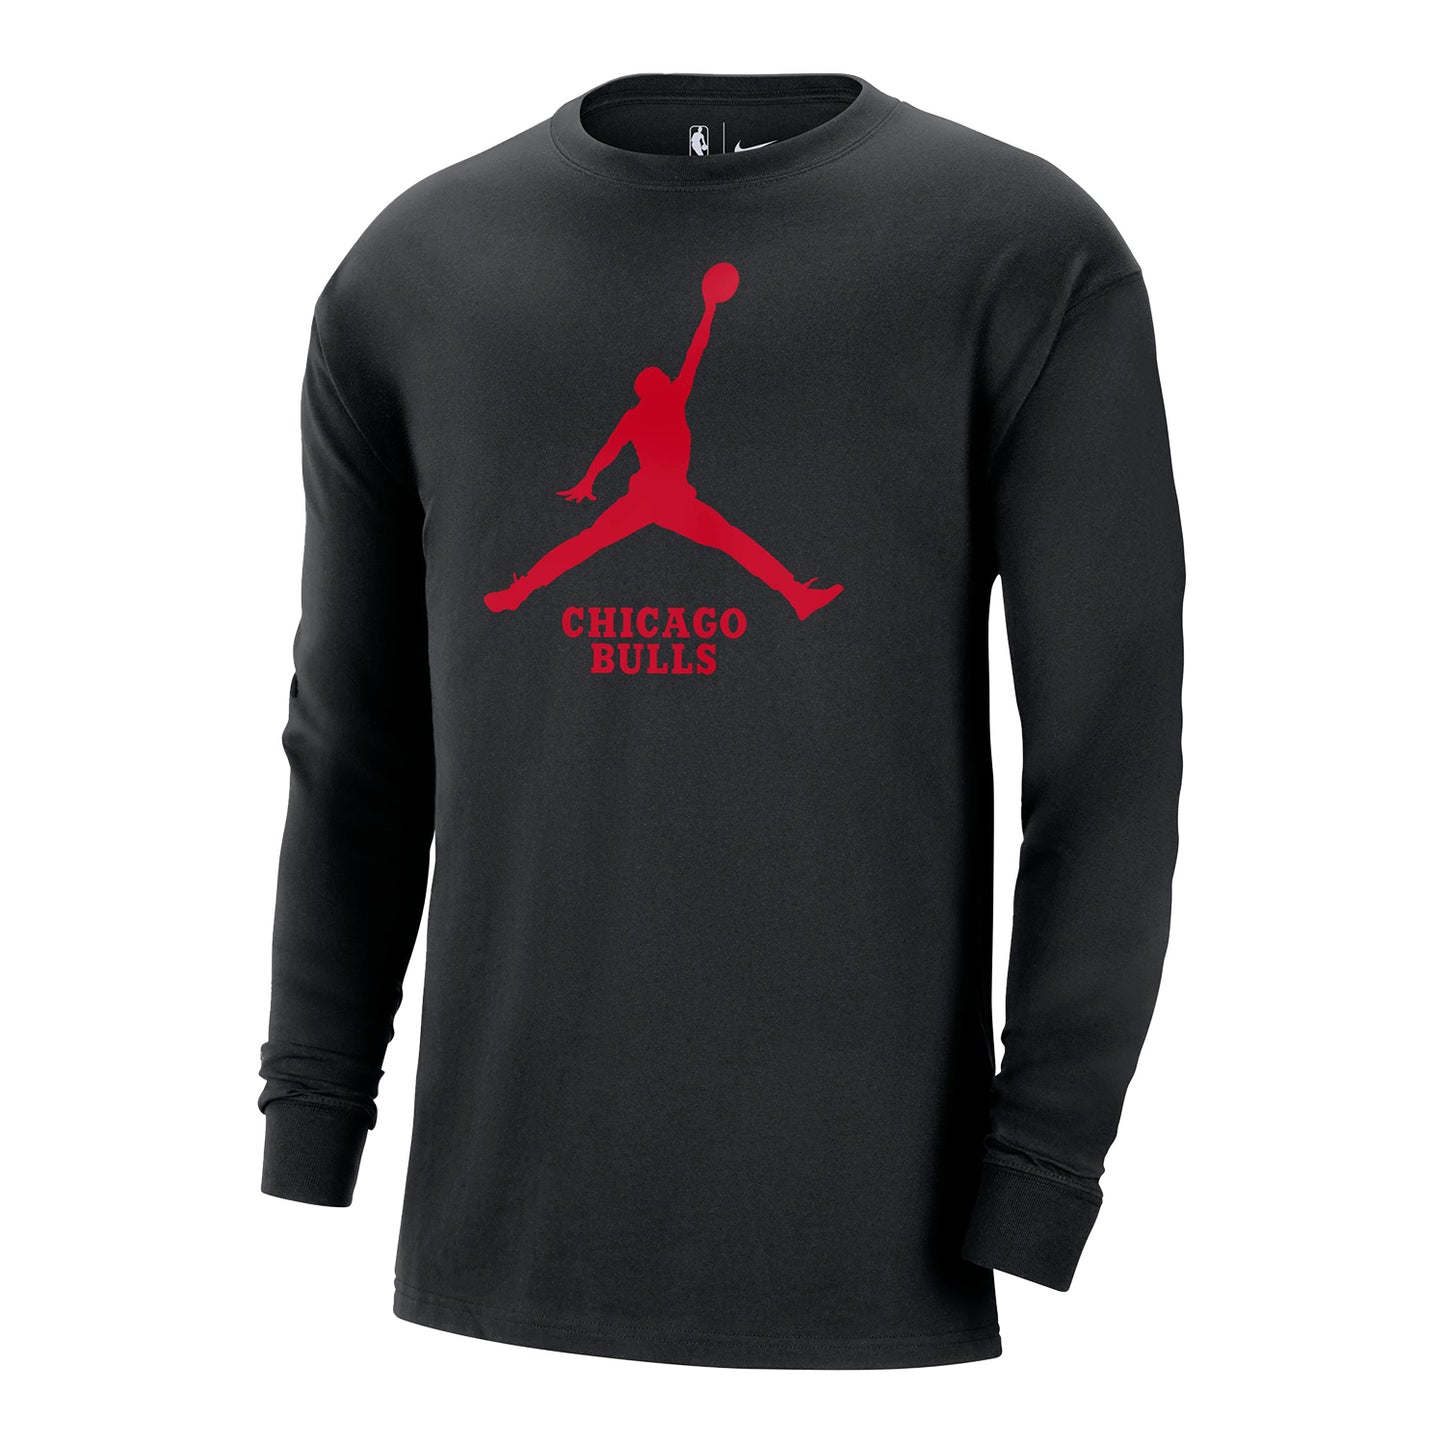 Chicago Bulls Nike Jordan Black Long Sleeve T-Shirt - front view